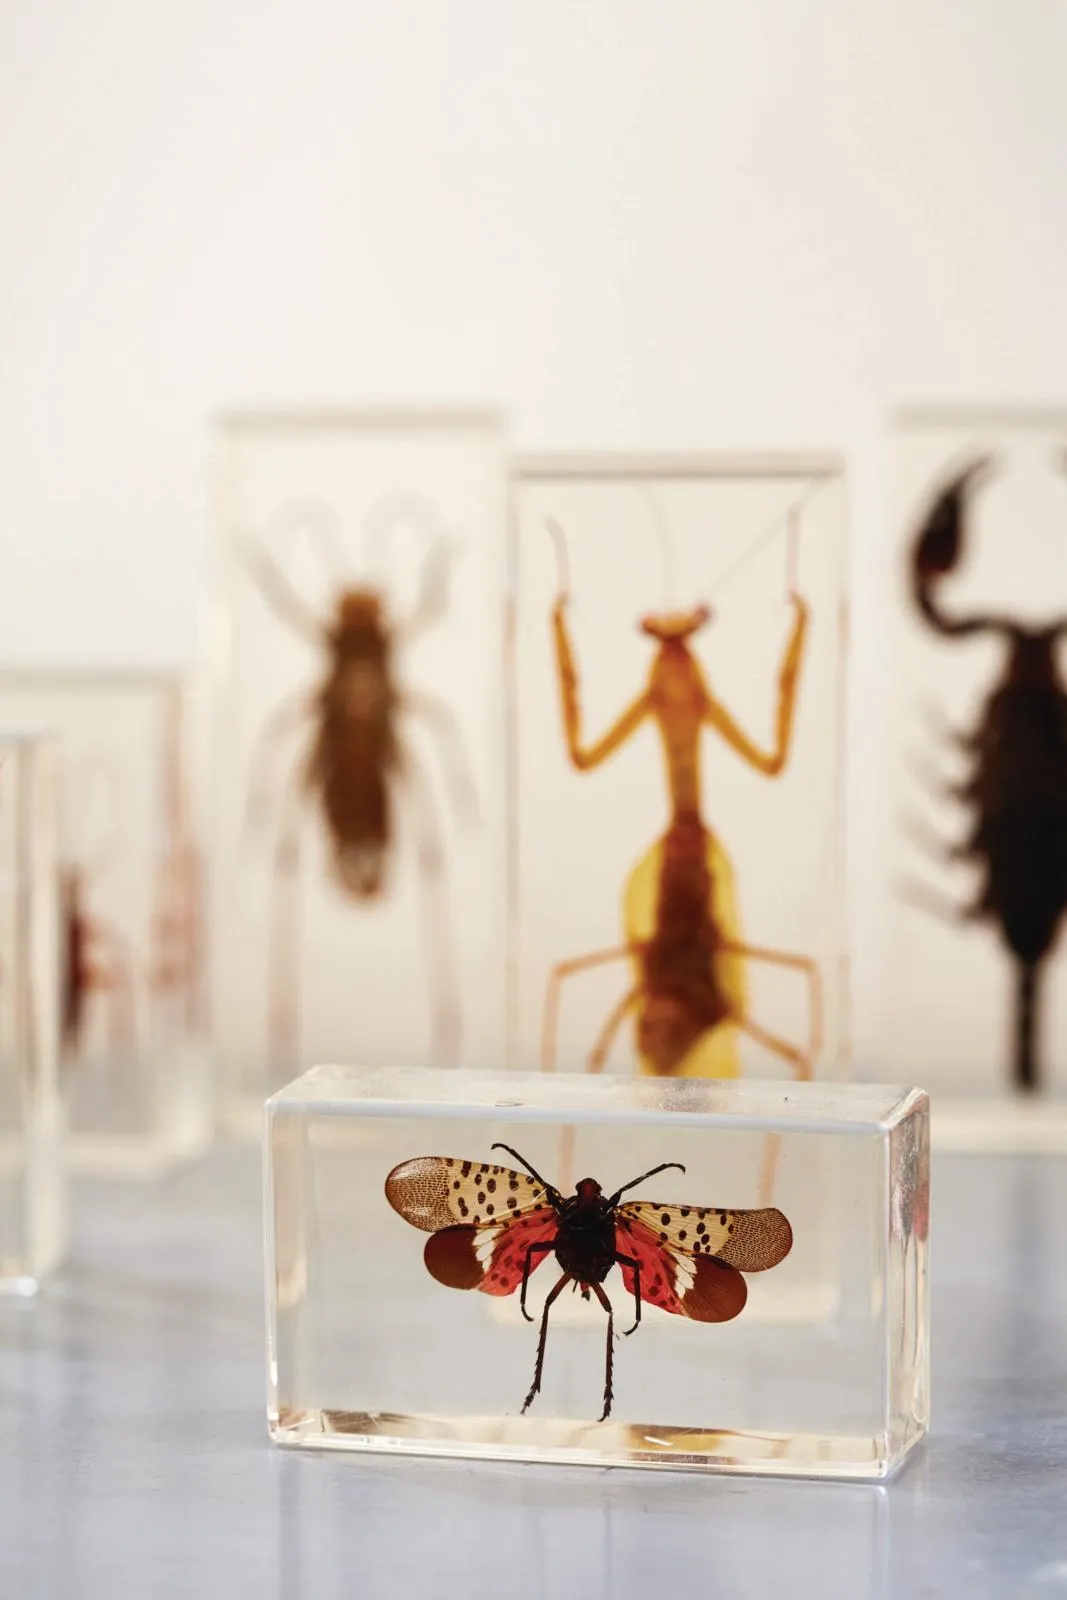 A former shambles Bridport Dorset living room bugs set in resin